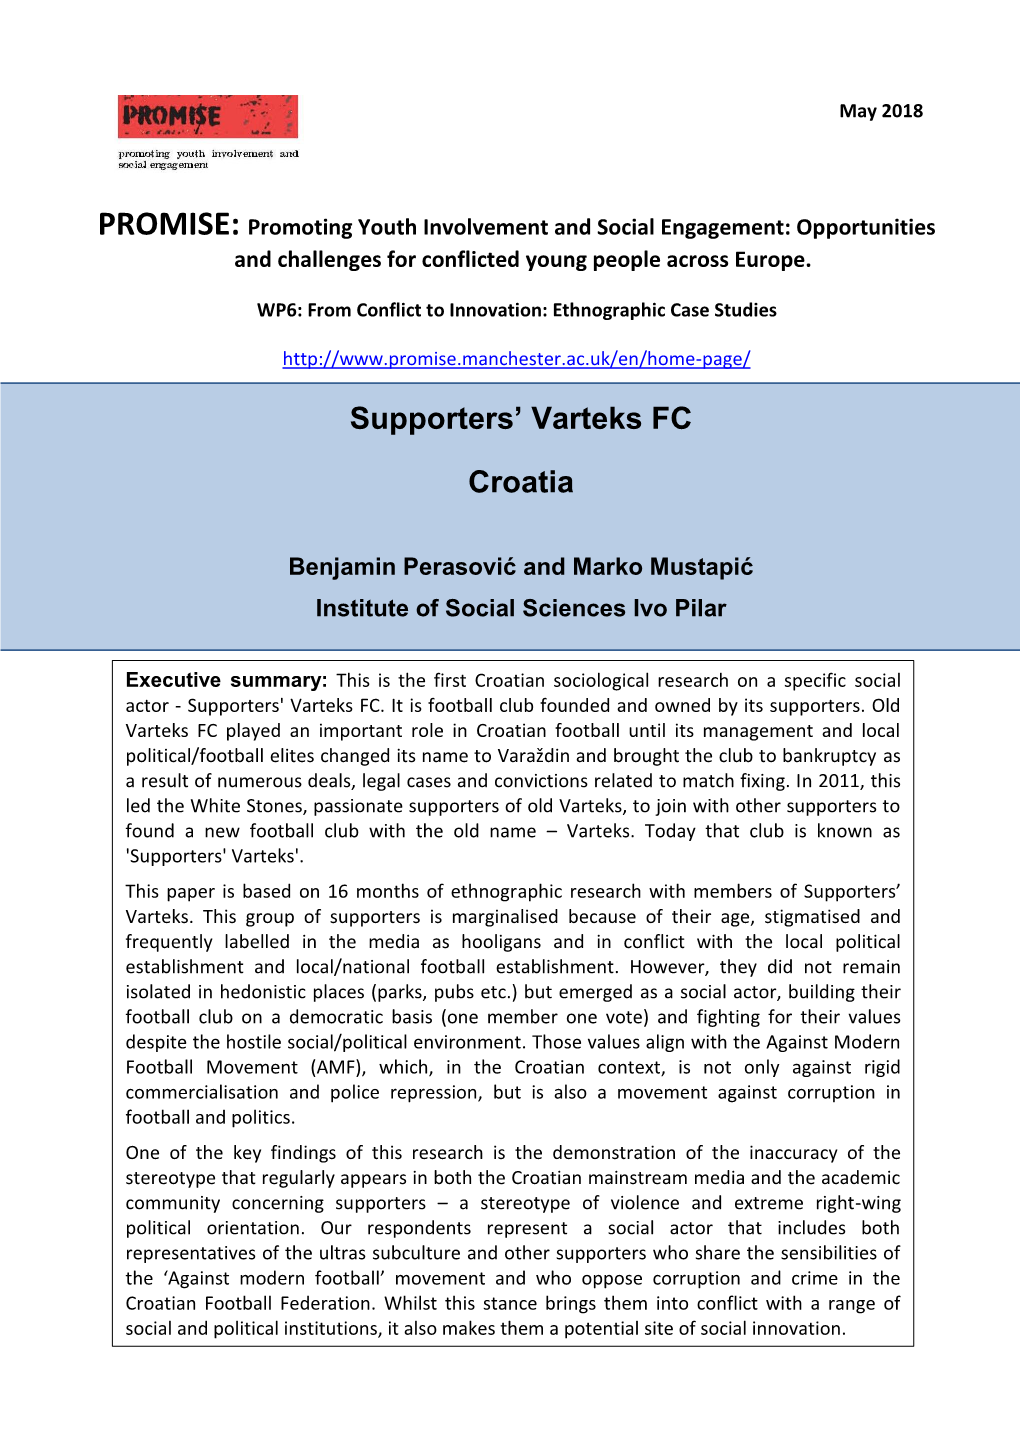 Supporters' Varteks FC